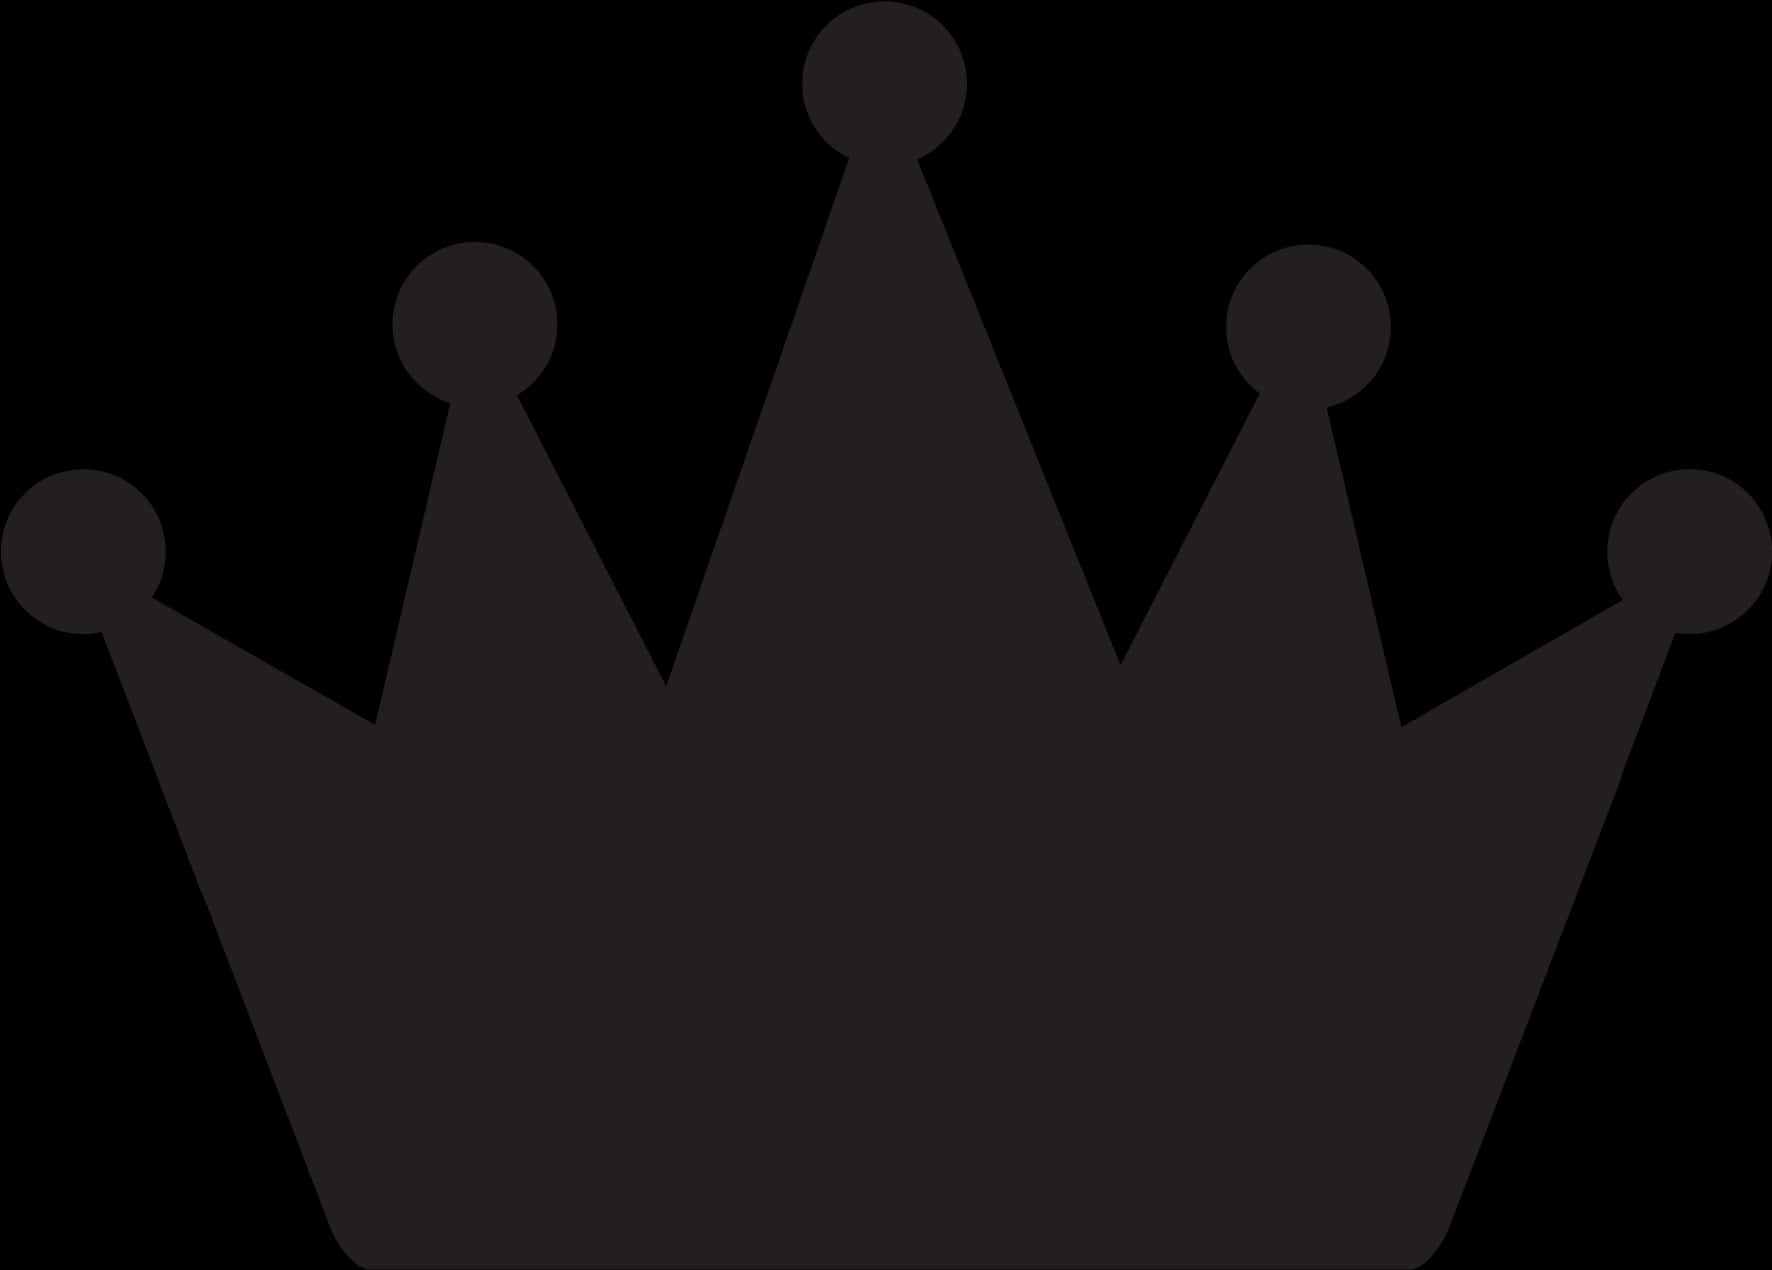 Silhouette Princess Crown Graphic